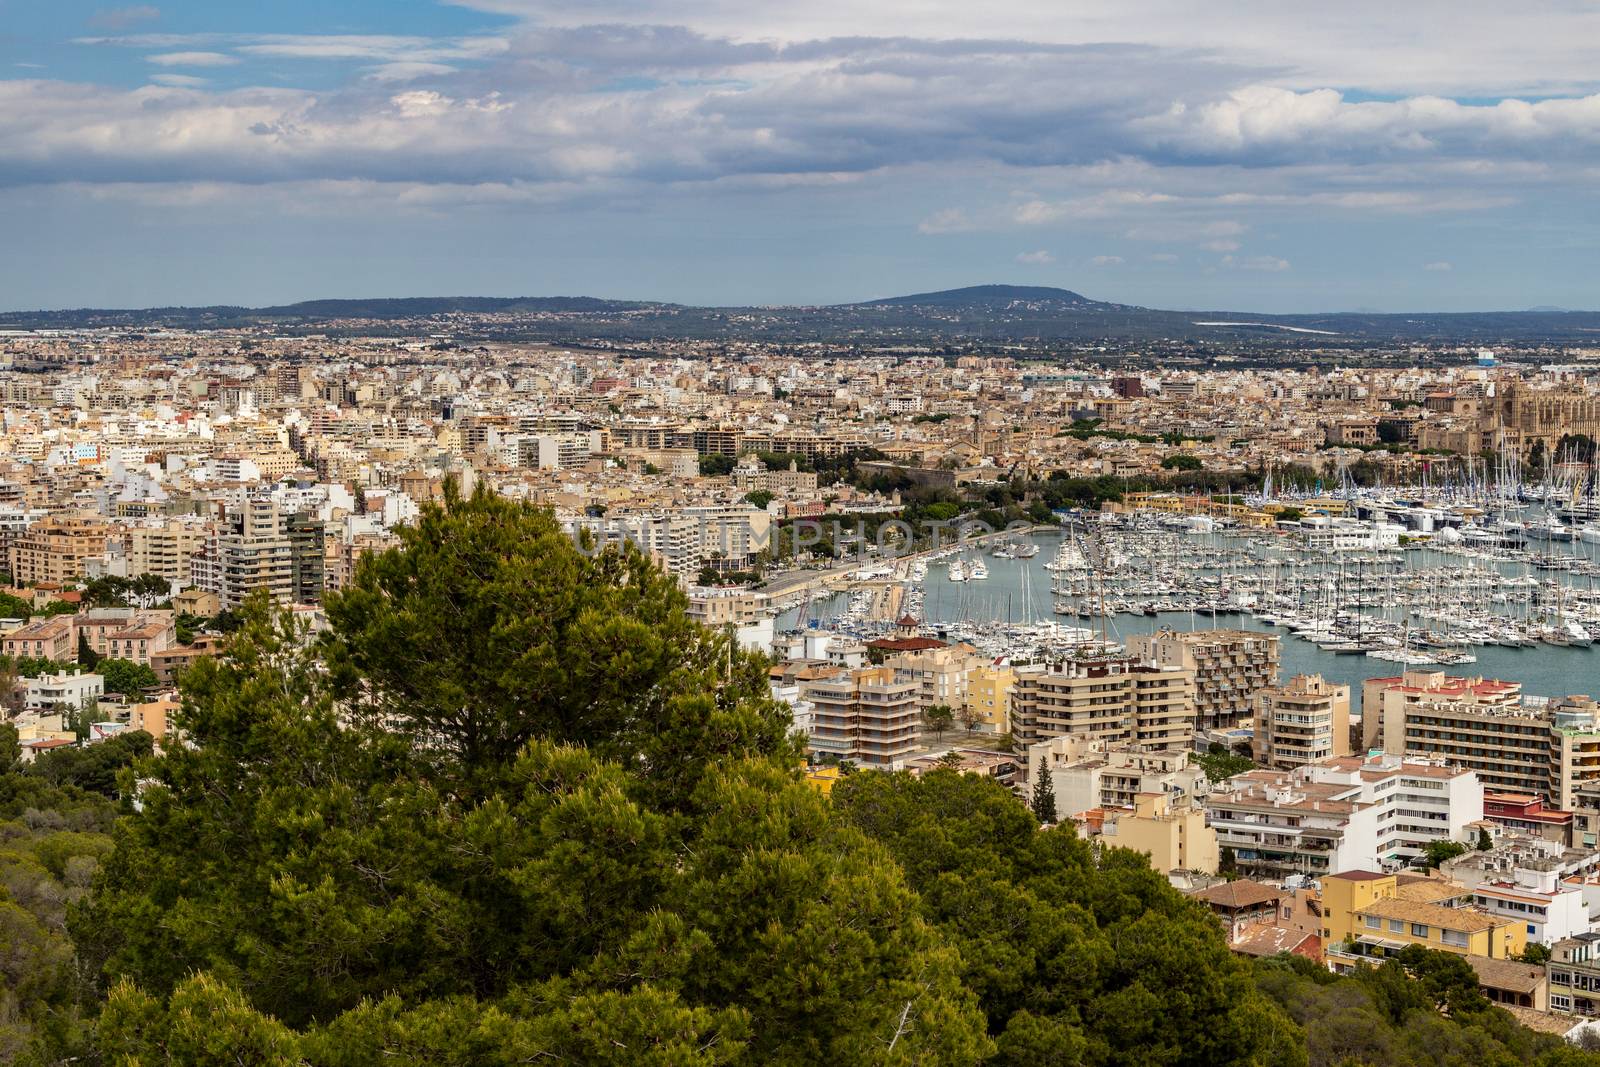 Panoramic view at Palma de Mallorca, Spain by reinerc